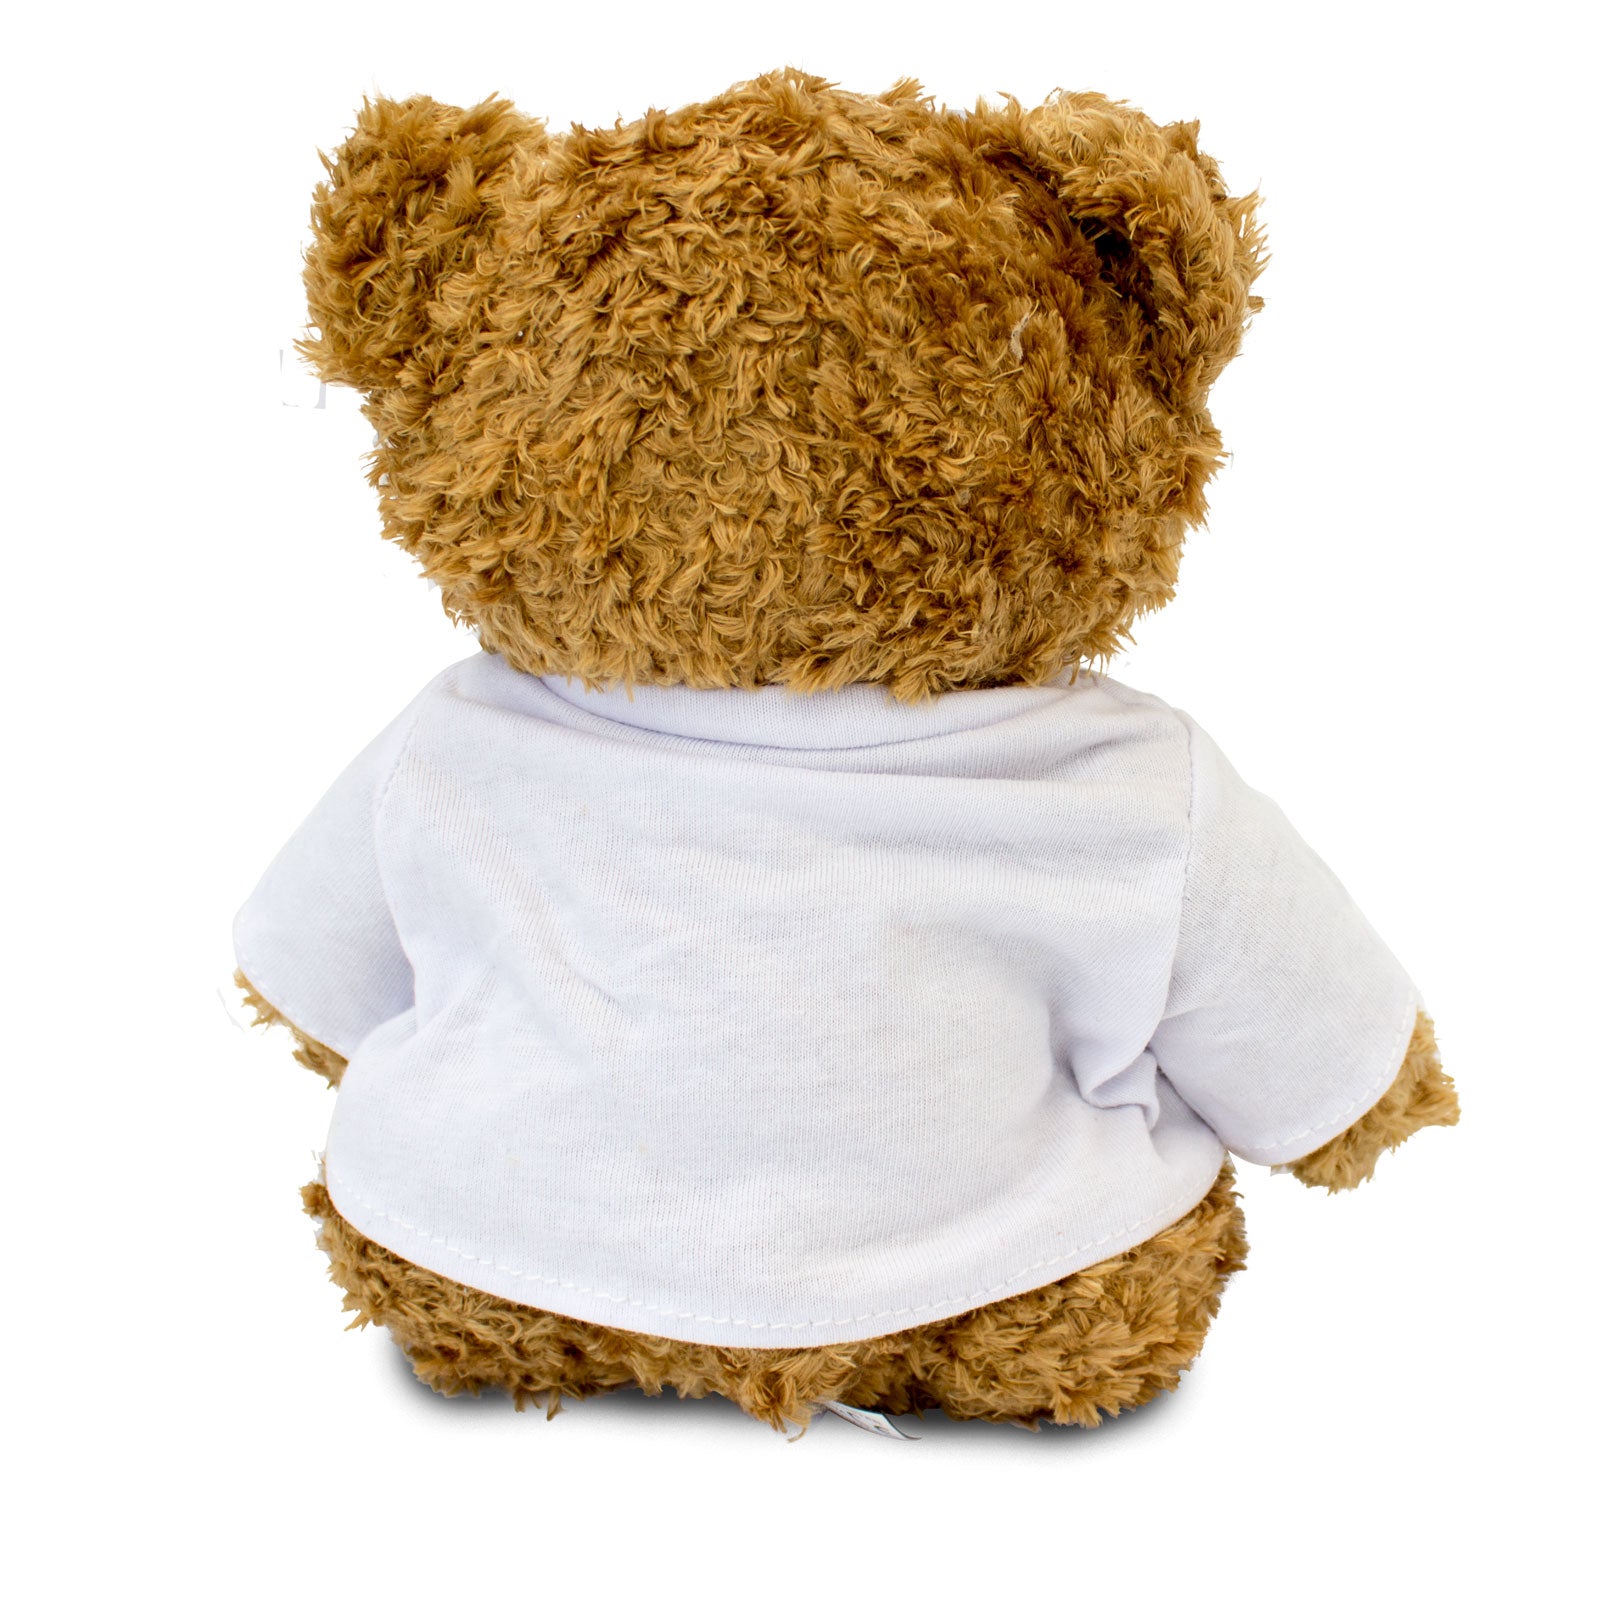 I Love Jungle - Teddy Bear